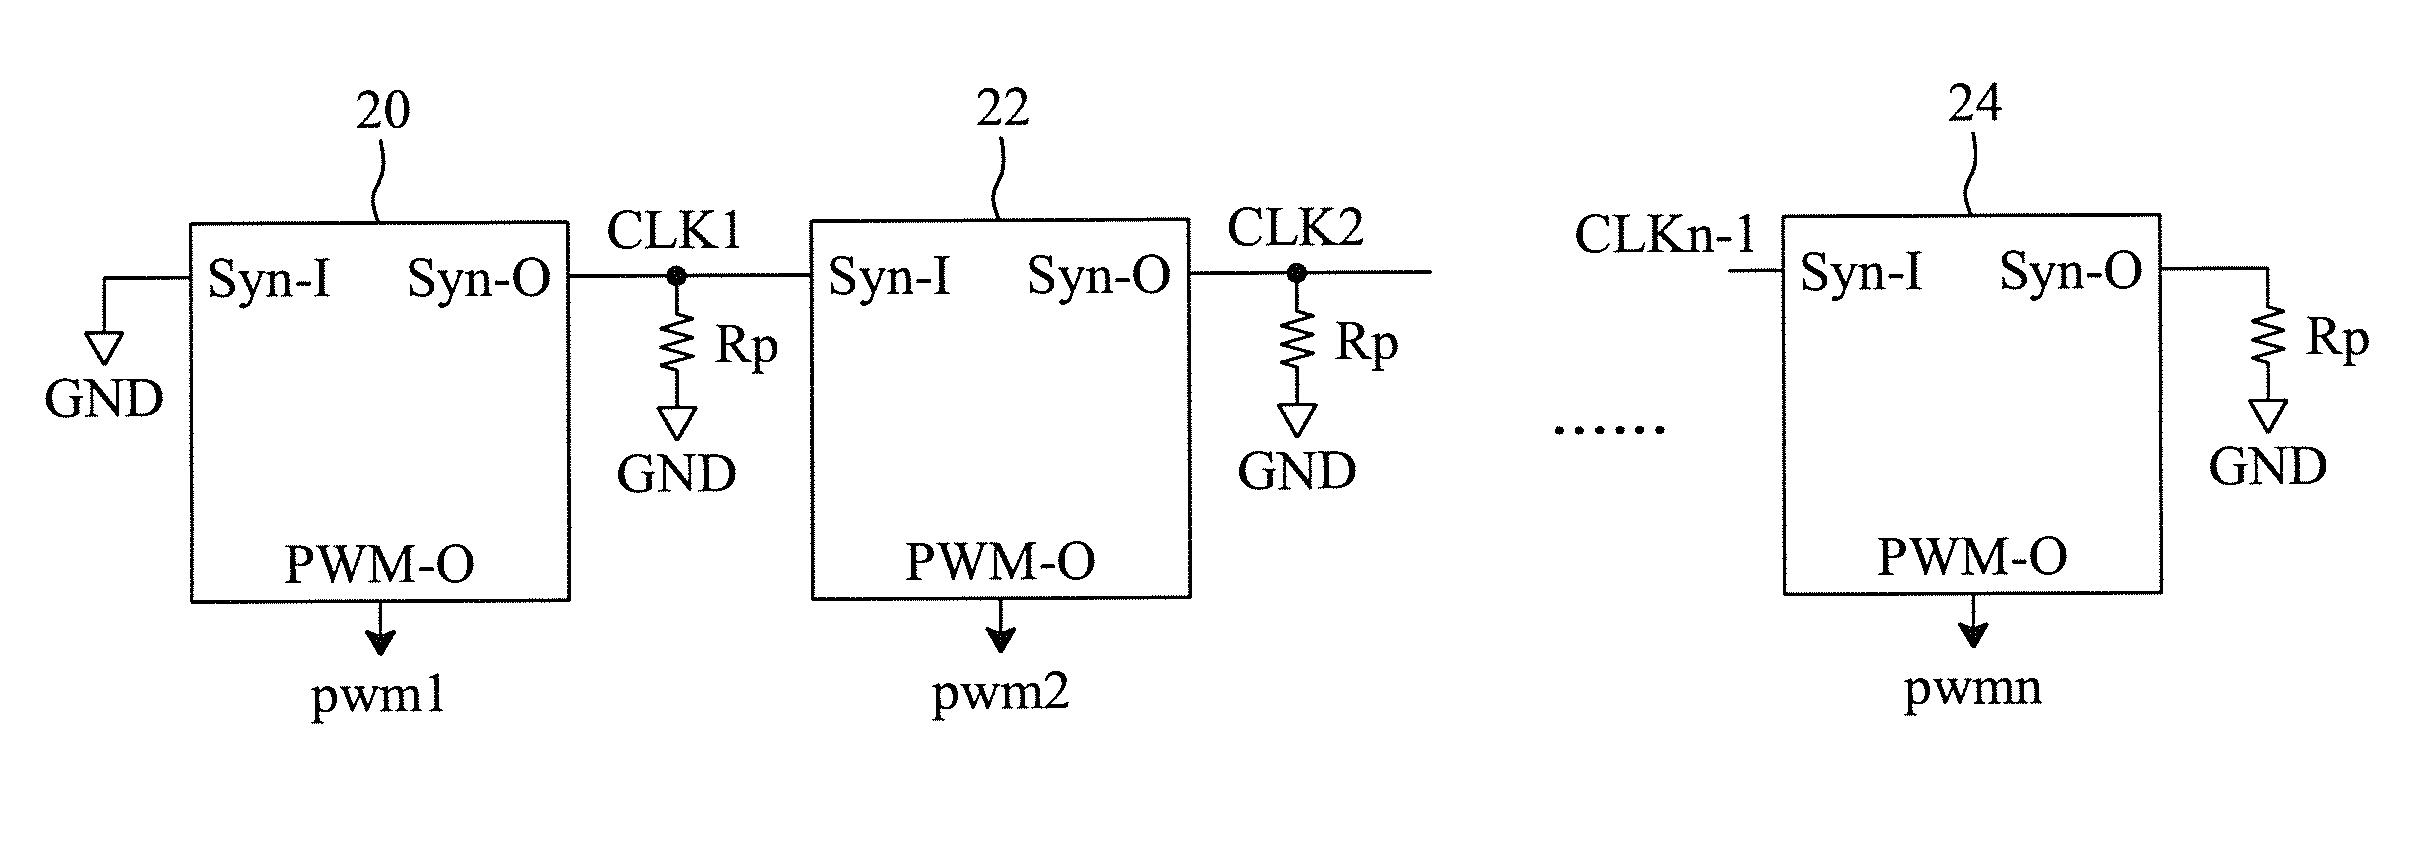 Phase interleaving control method for a multi-channel regulator system